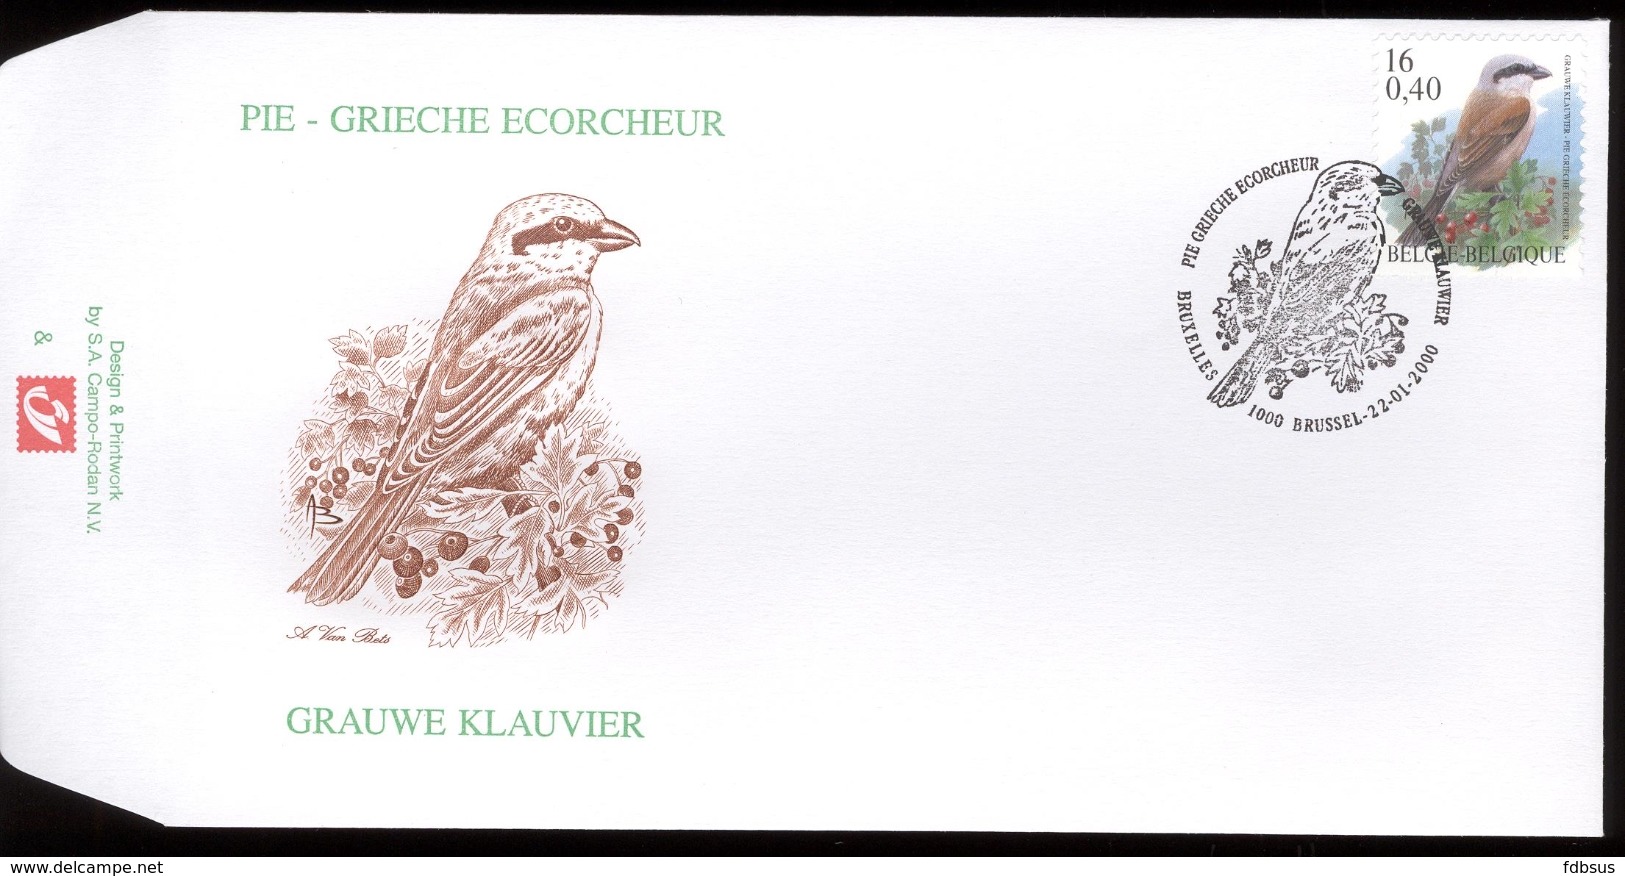 2000 - Fdc - Obp 2885 - Vogels Buzin Grauwe Klavier - Cote Euro 5,50 - 1991-2000